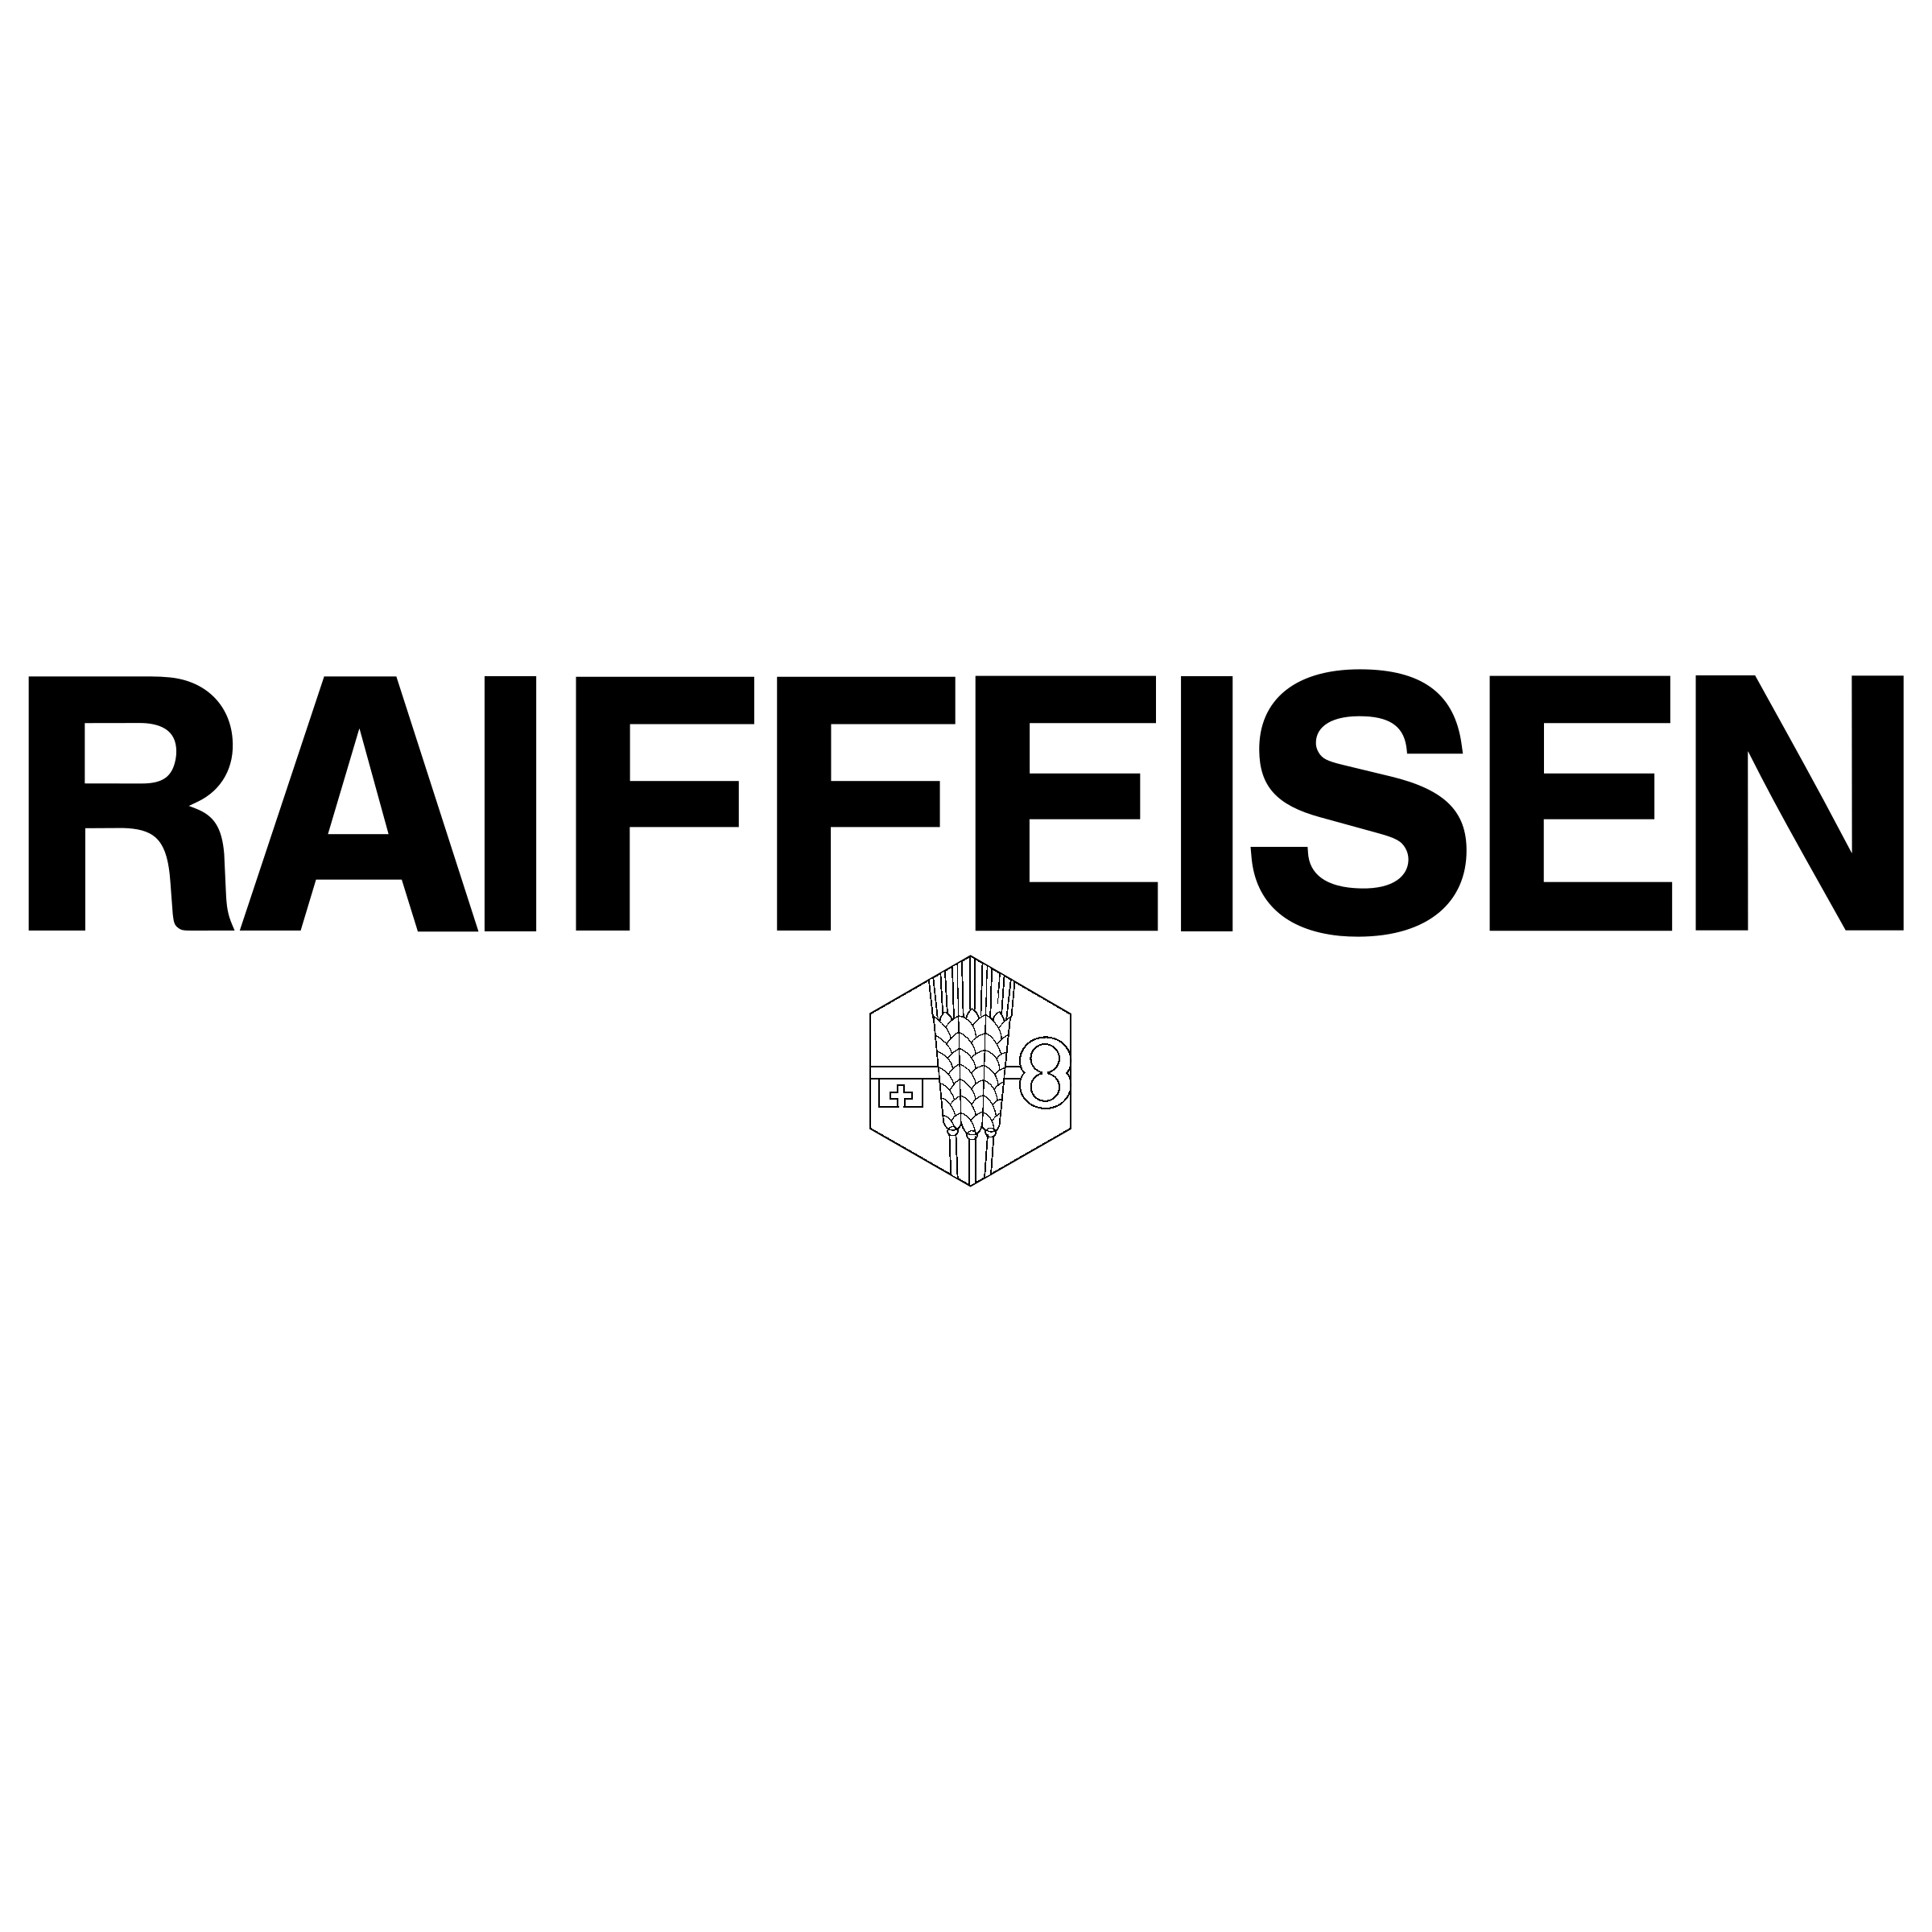 Raiffeisen Logo - Raiffeisen Bank Logo PNG Transparent & SVG Vector - Freebie Supply